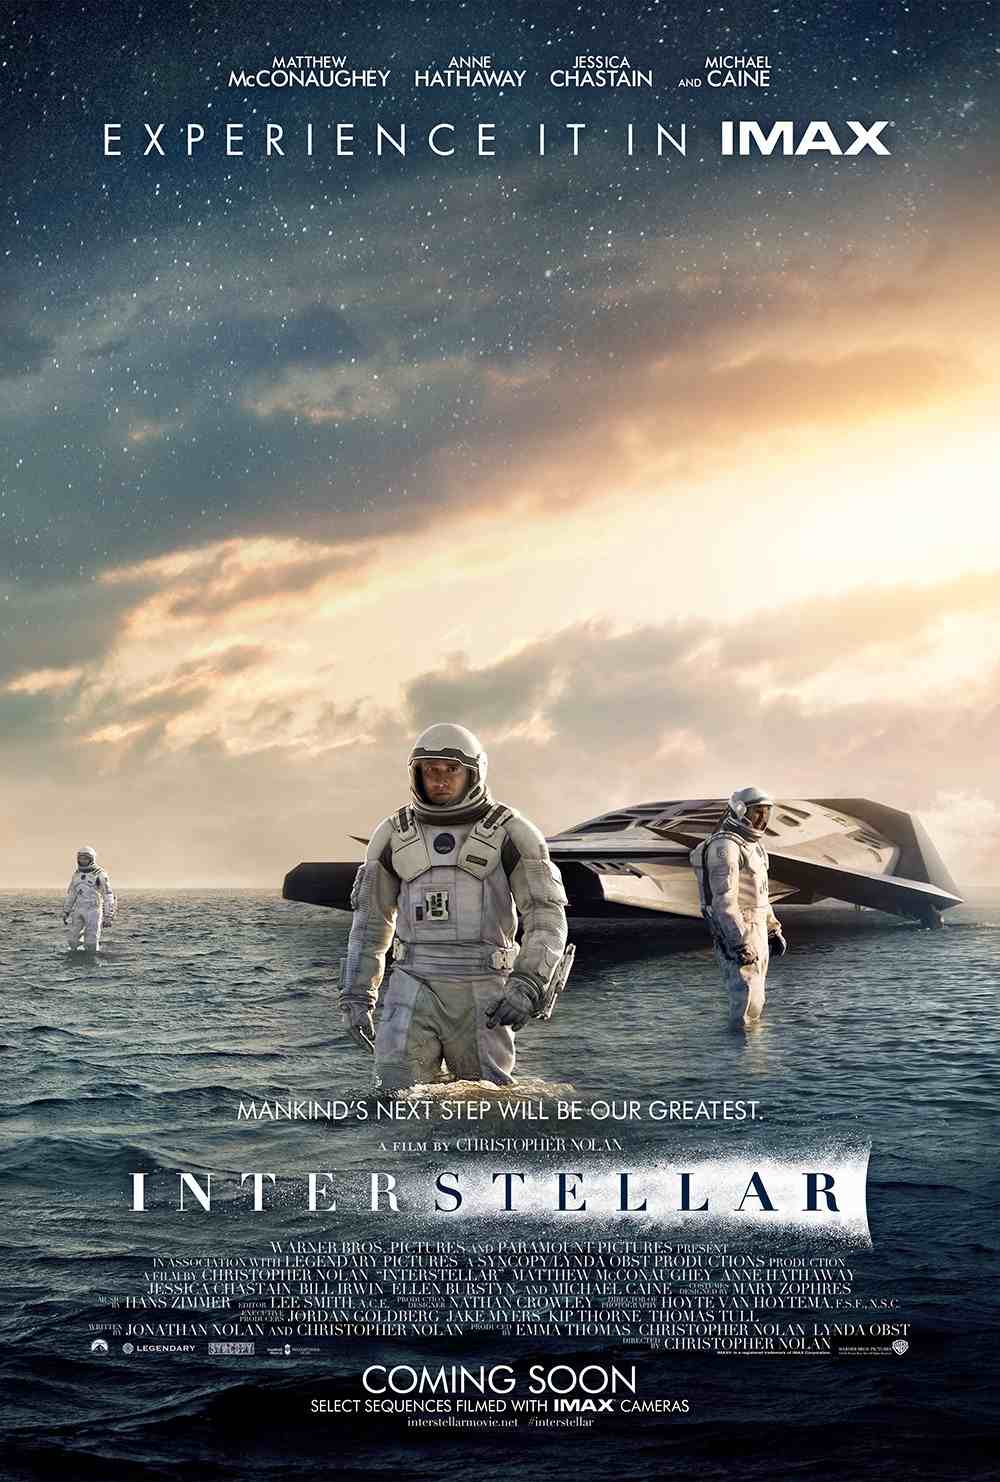 interstellar_movie_poster_3.jpg